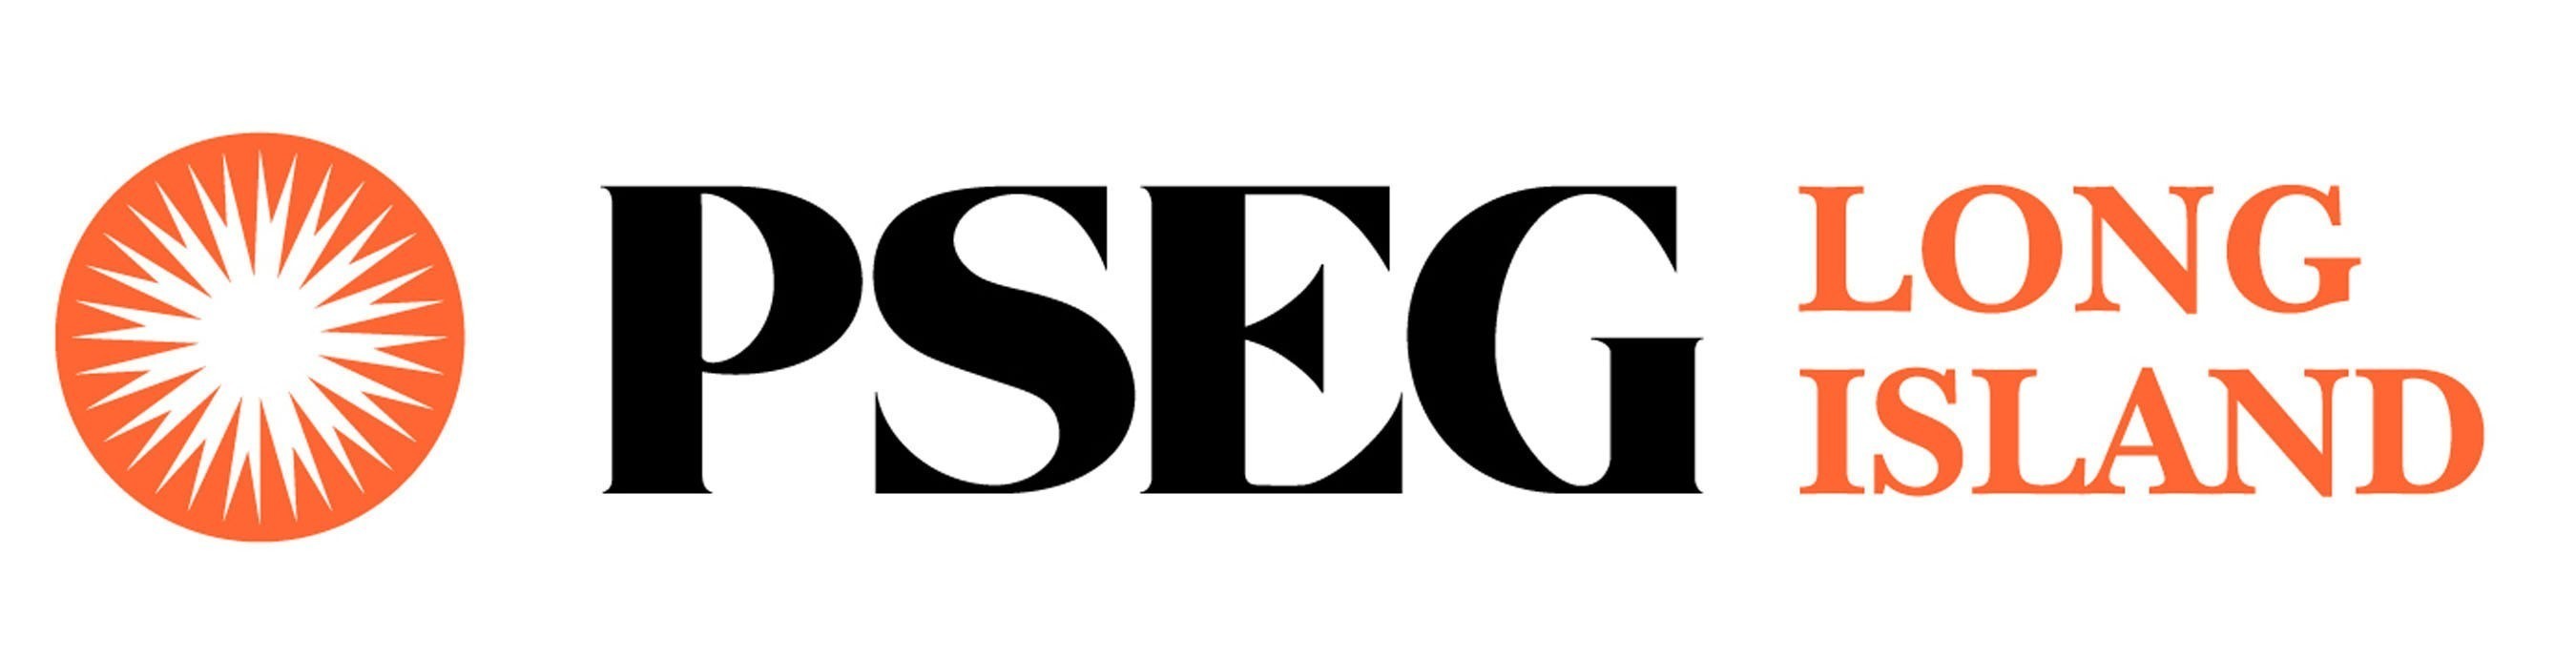 PSEG Long Island logo (PRNewsFoto/PSEG Long Island) (PRNewsFoto/PSEG Long Island)